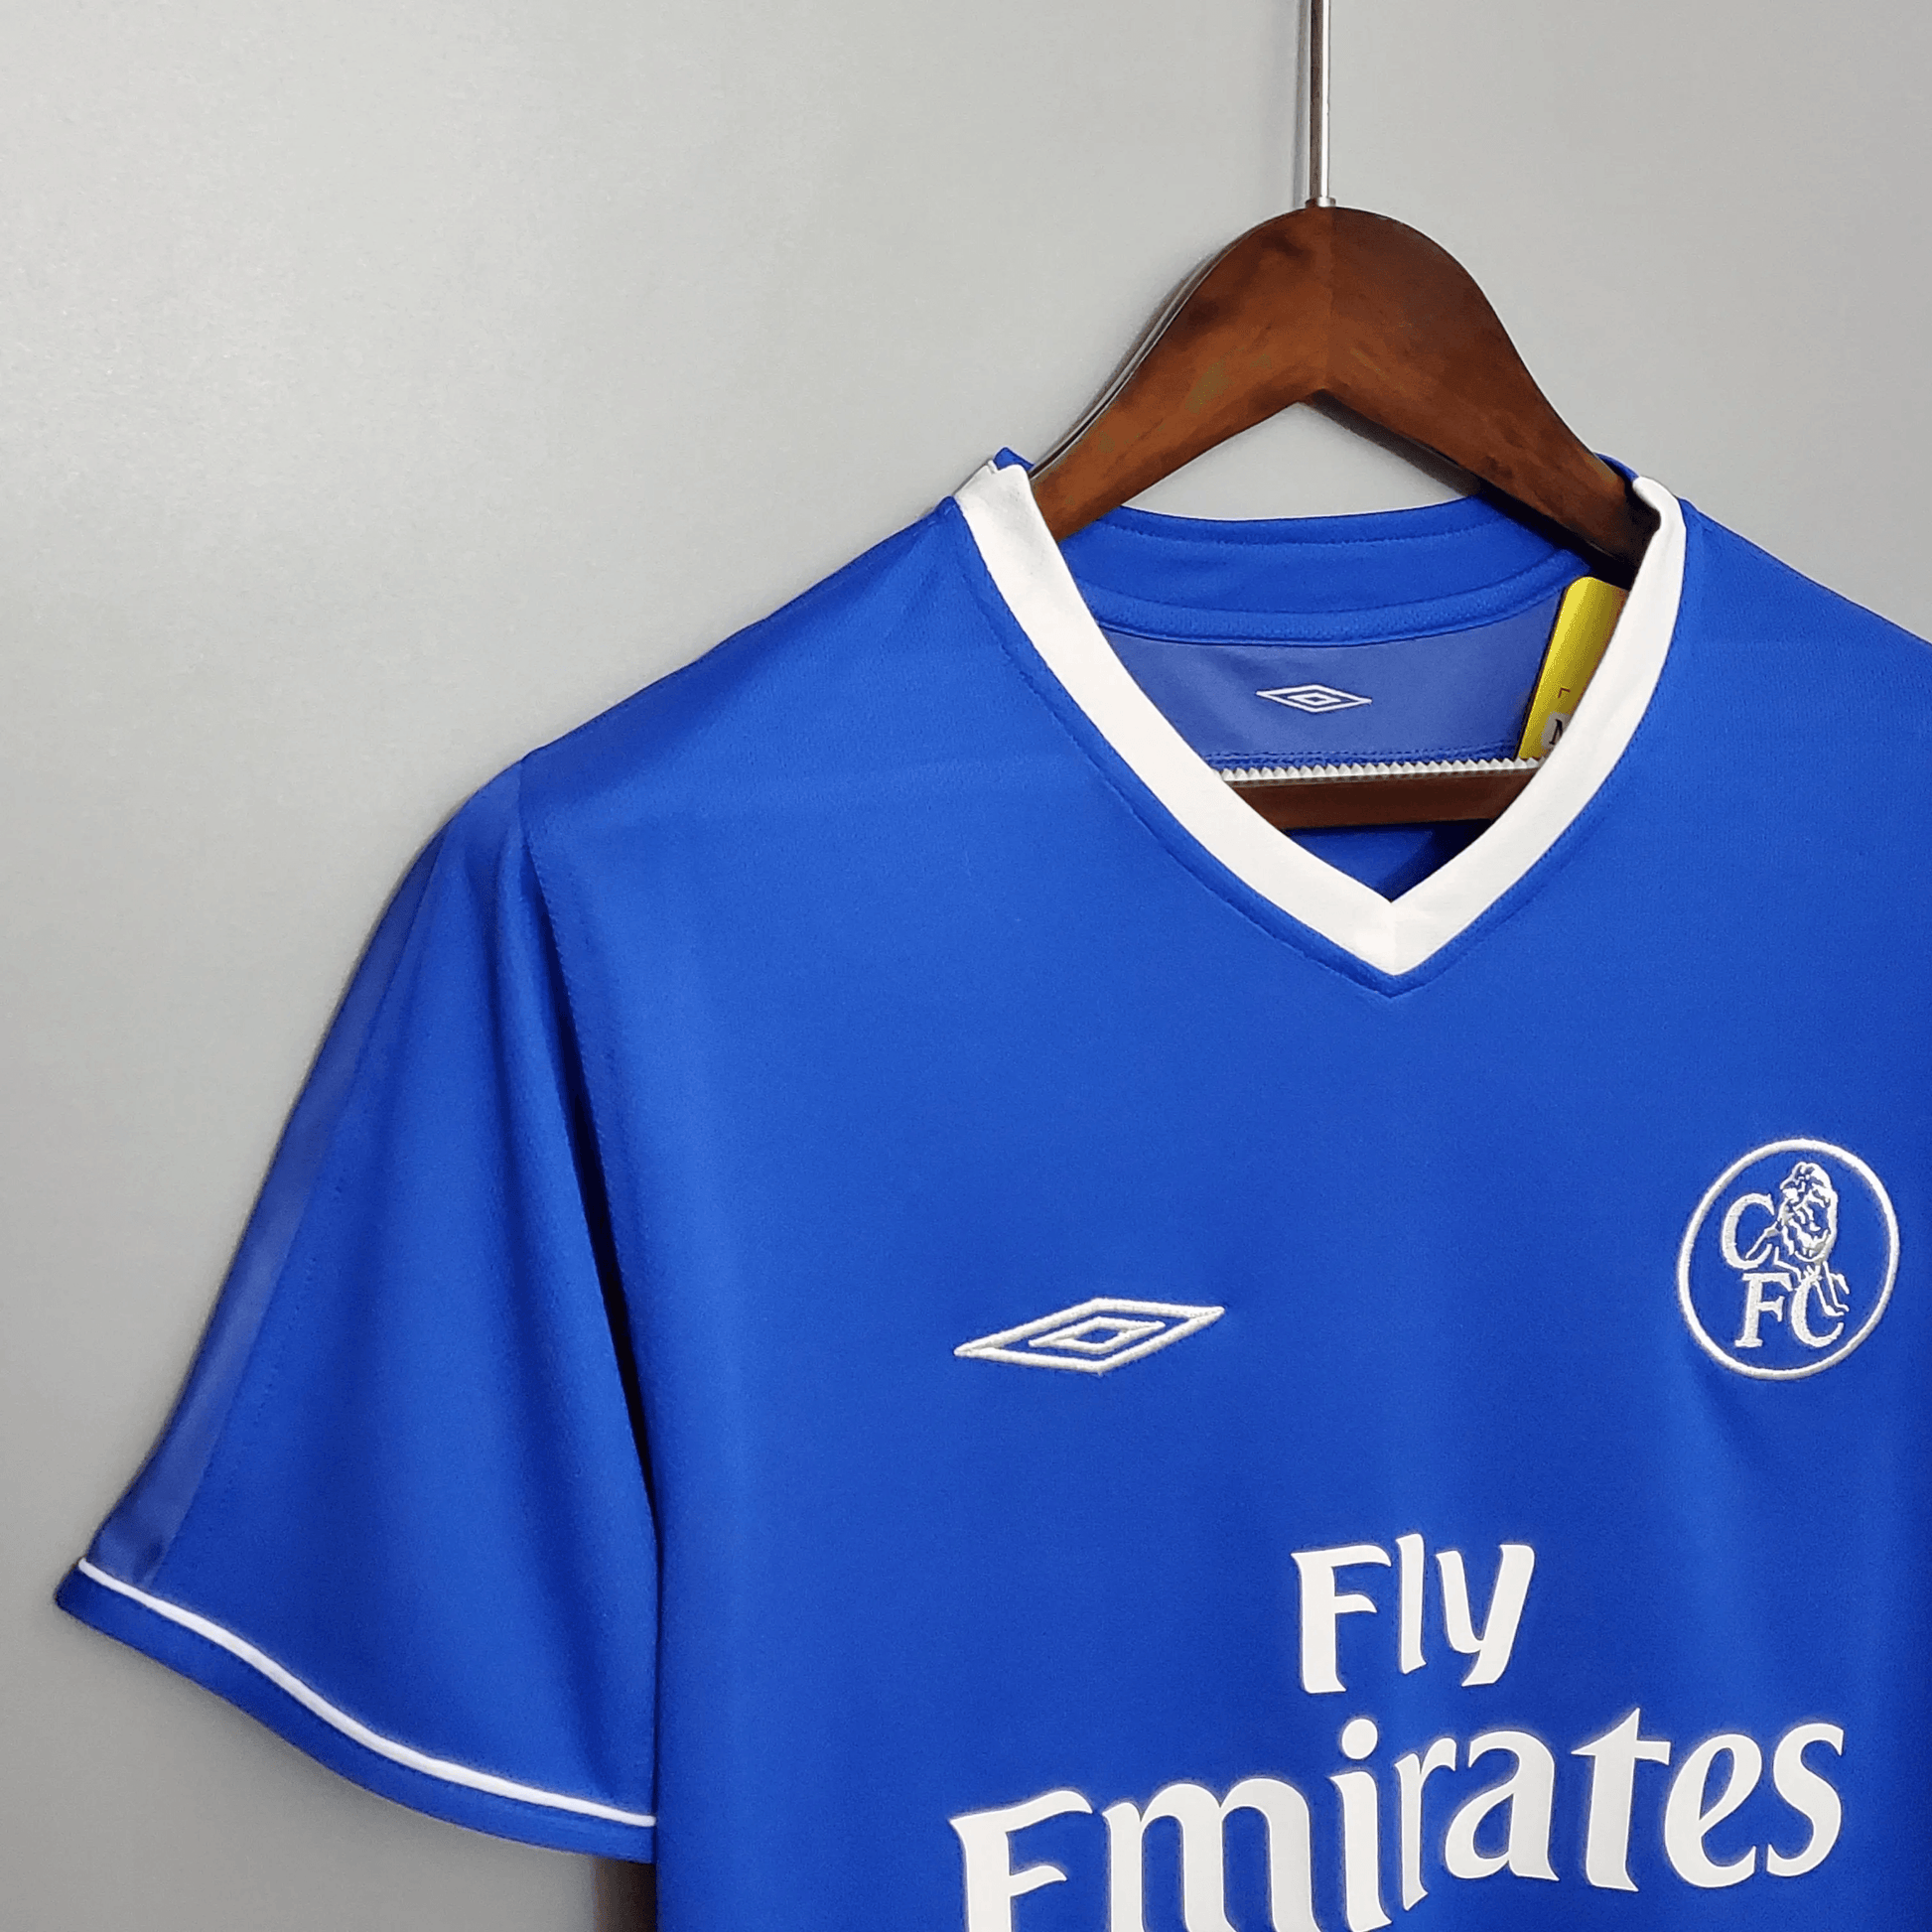 Chelsea Home Shirt 2003-2005 - Football Kit Up